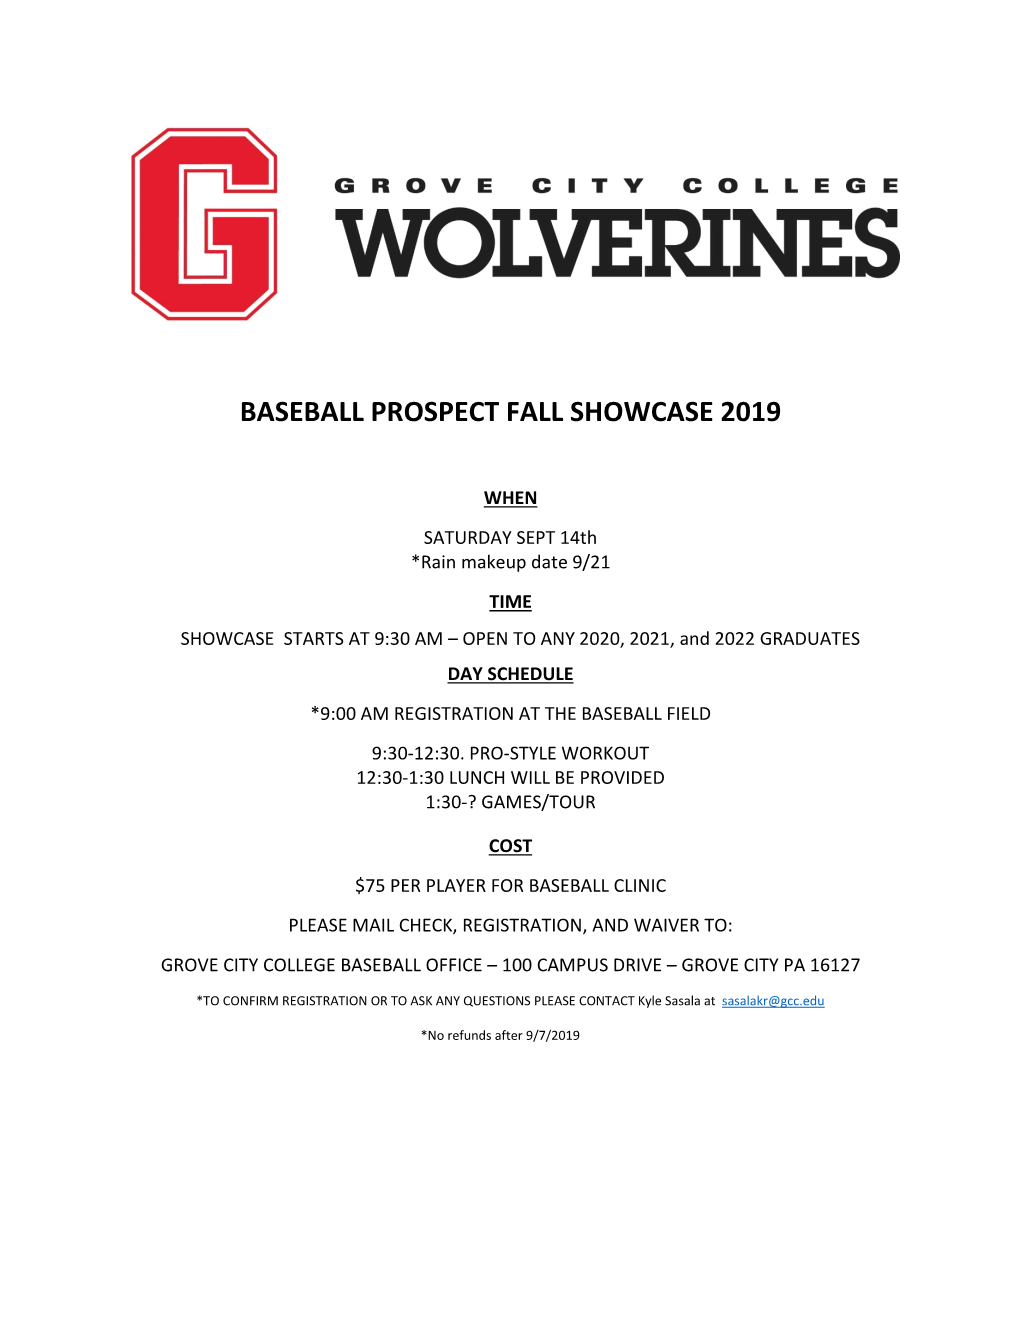 Baseball Prospect Fall Showcase 2019